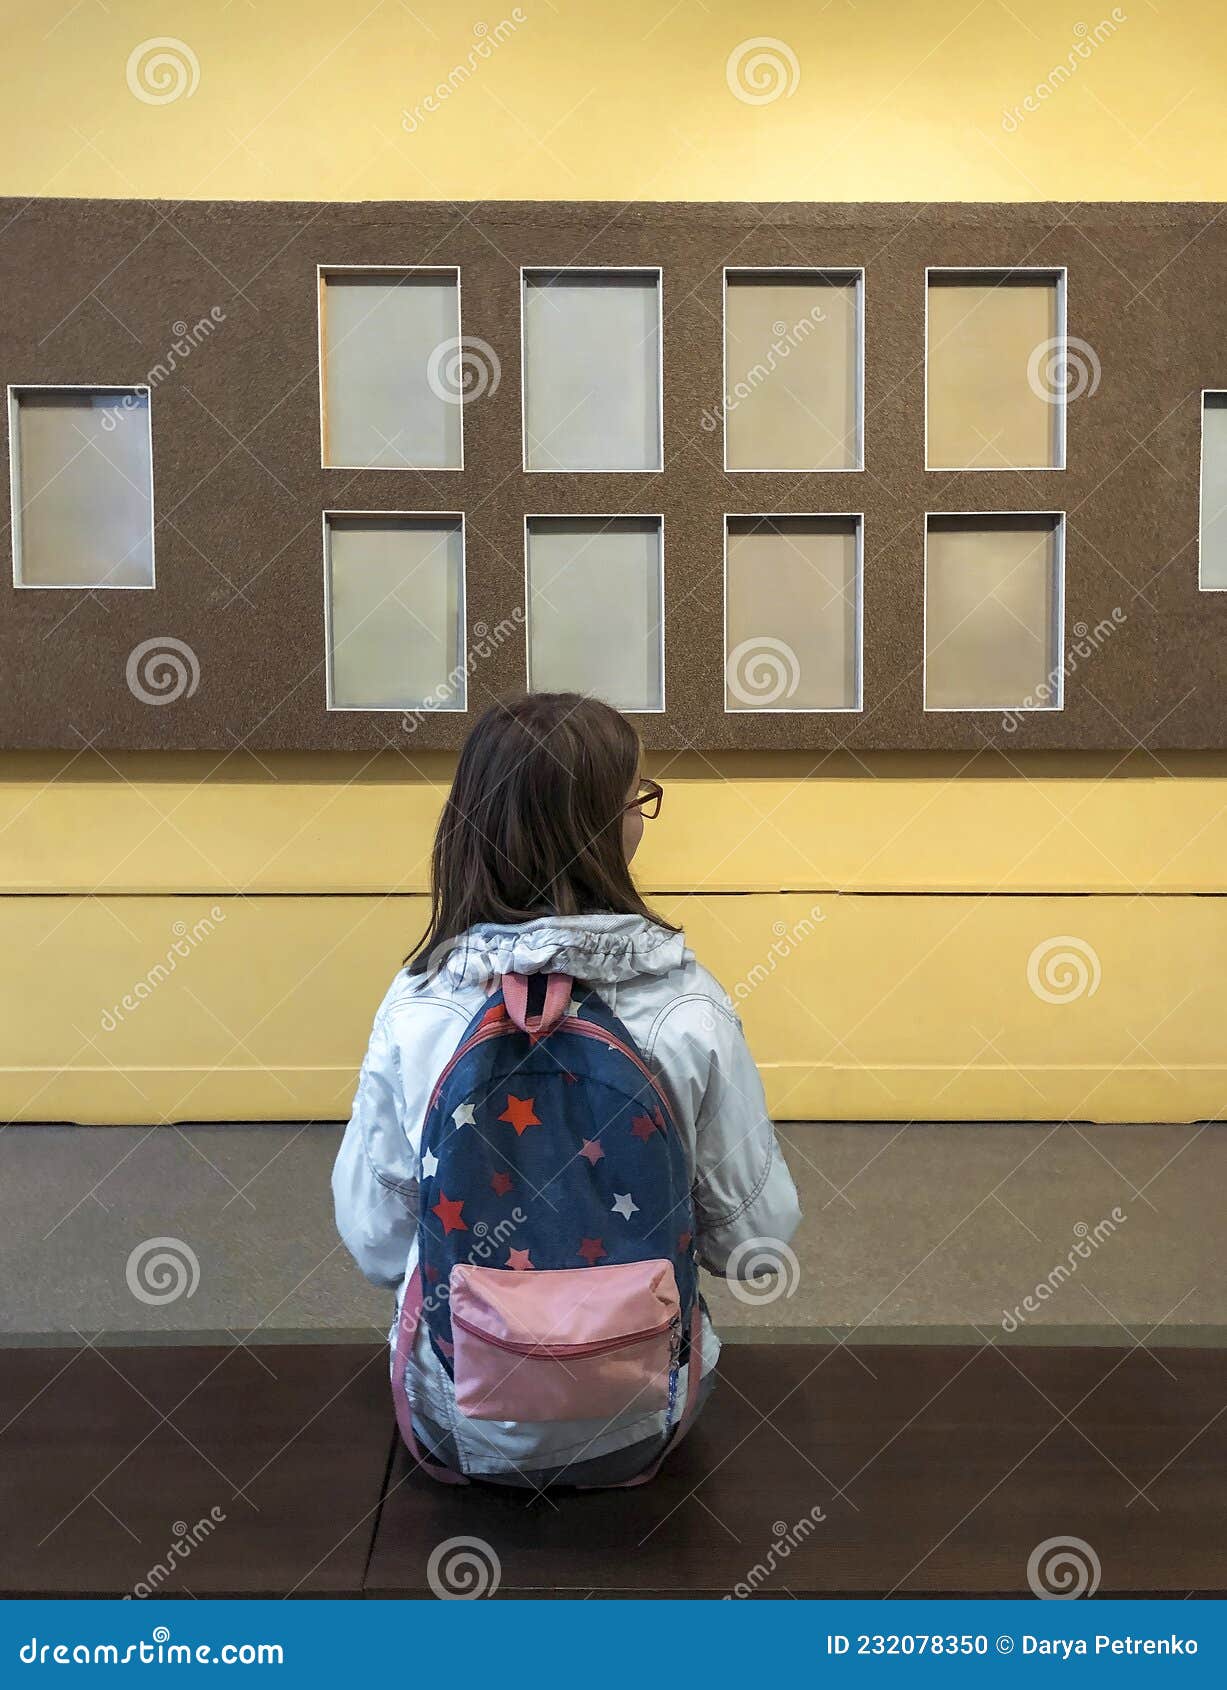 https://thumbs.dreamstime.com/z/back-view-teen-school-girl-backpack-sitting-bench-museum-visiting-exhibition-schoolgirl-art-gallery-looking-232078350.jpg